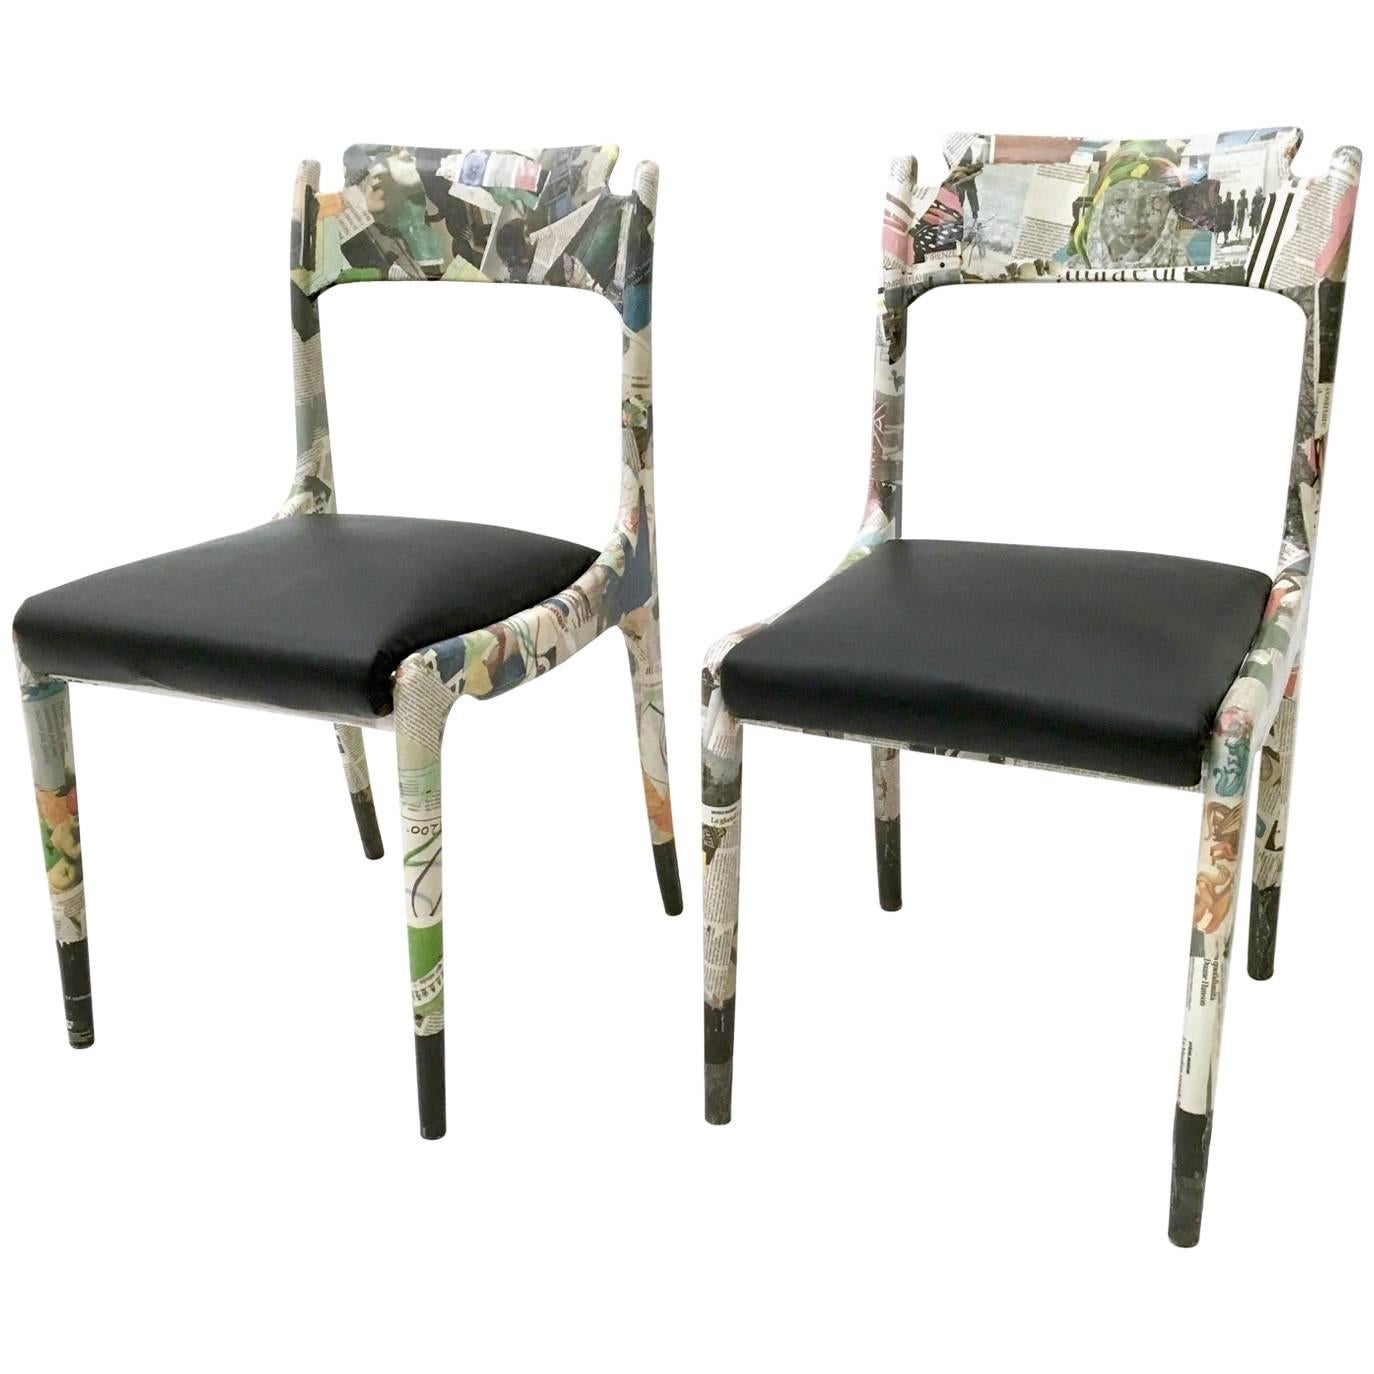 Pair of Chairs "La Lettura" by Carmelo La Gaipa, Italy, 2017